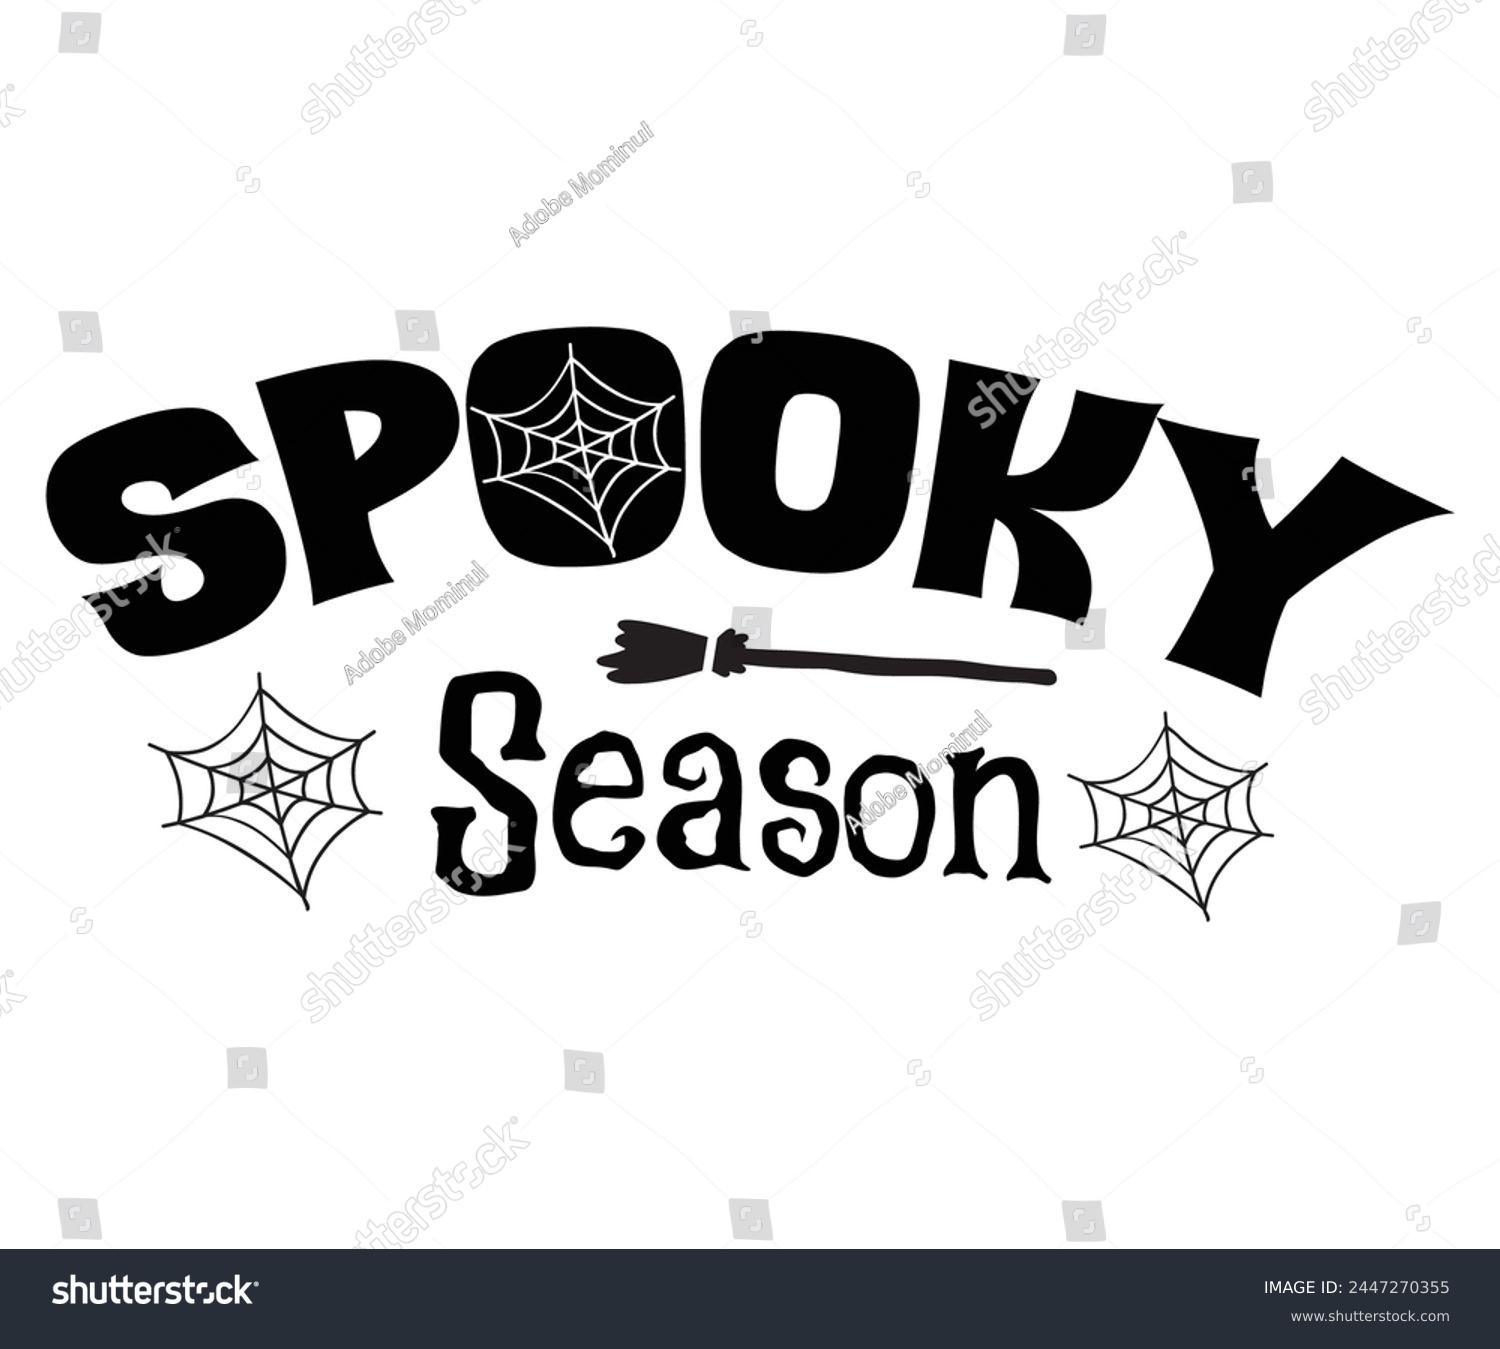 SVG of Spooky Season Svg,Halloween Svg,Typography,Halloween Quotes,Witches Svg,Halloween Party,Halloween Costume,Halloween Gift,Funny Halloween,Spooky Svg,Funny T shirt,Ghost Svg,Cut file svg